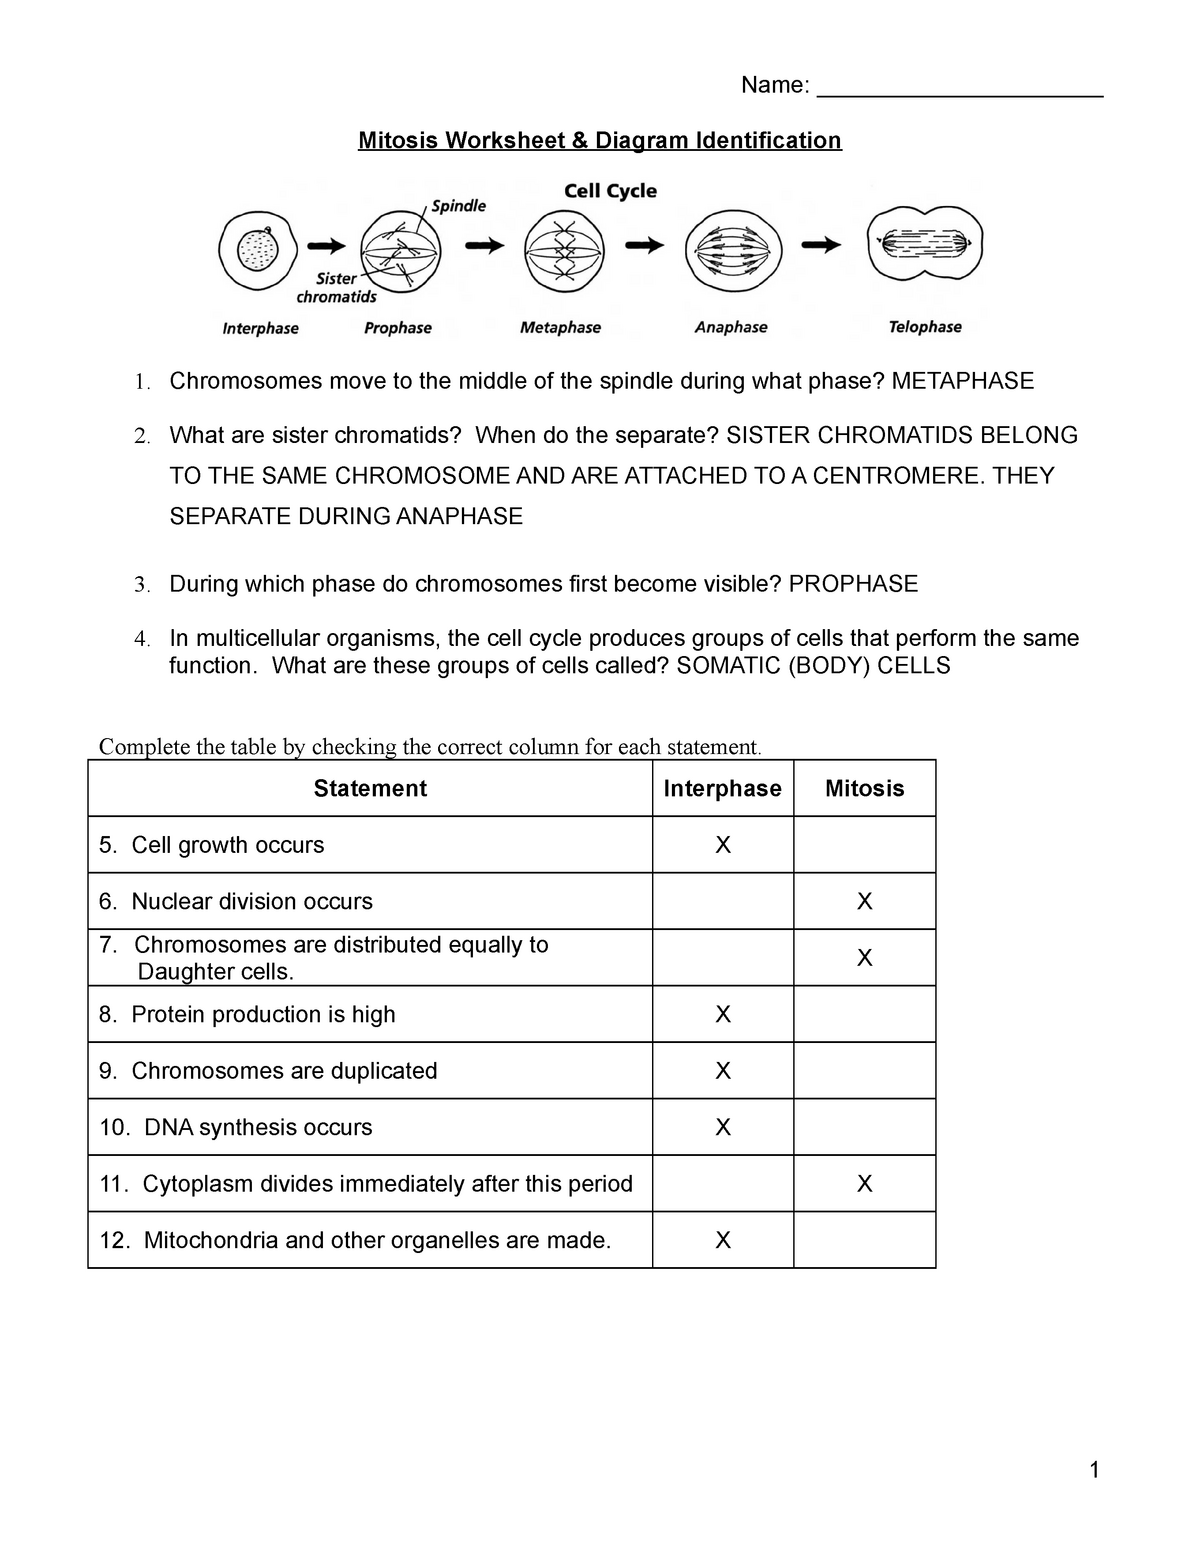 mitosisworksheet-key-1cq6ob9-name-mitosis-worksheet-diagram-studocu